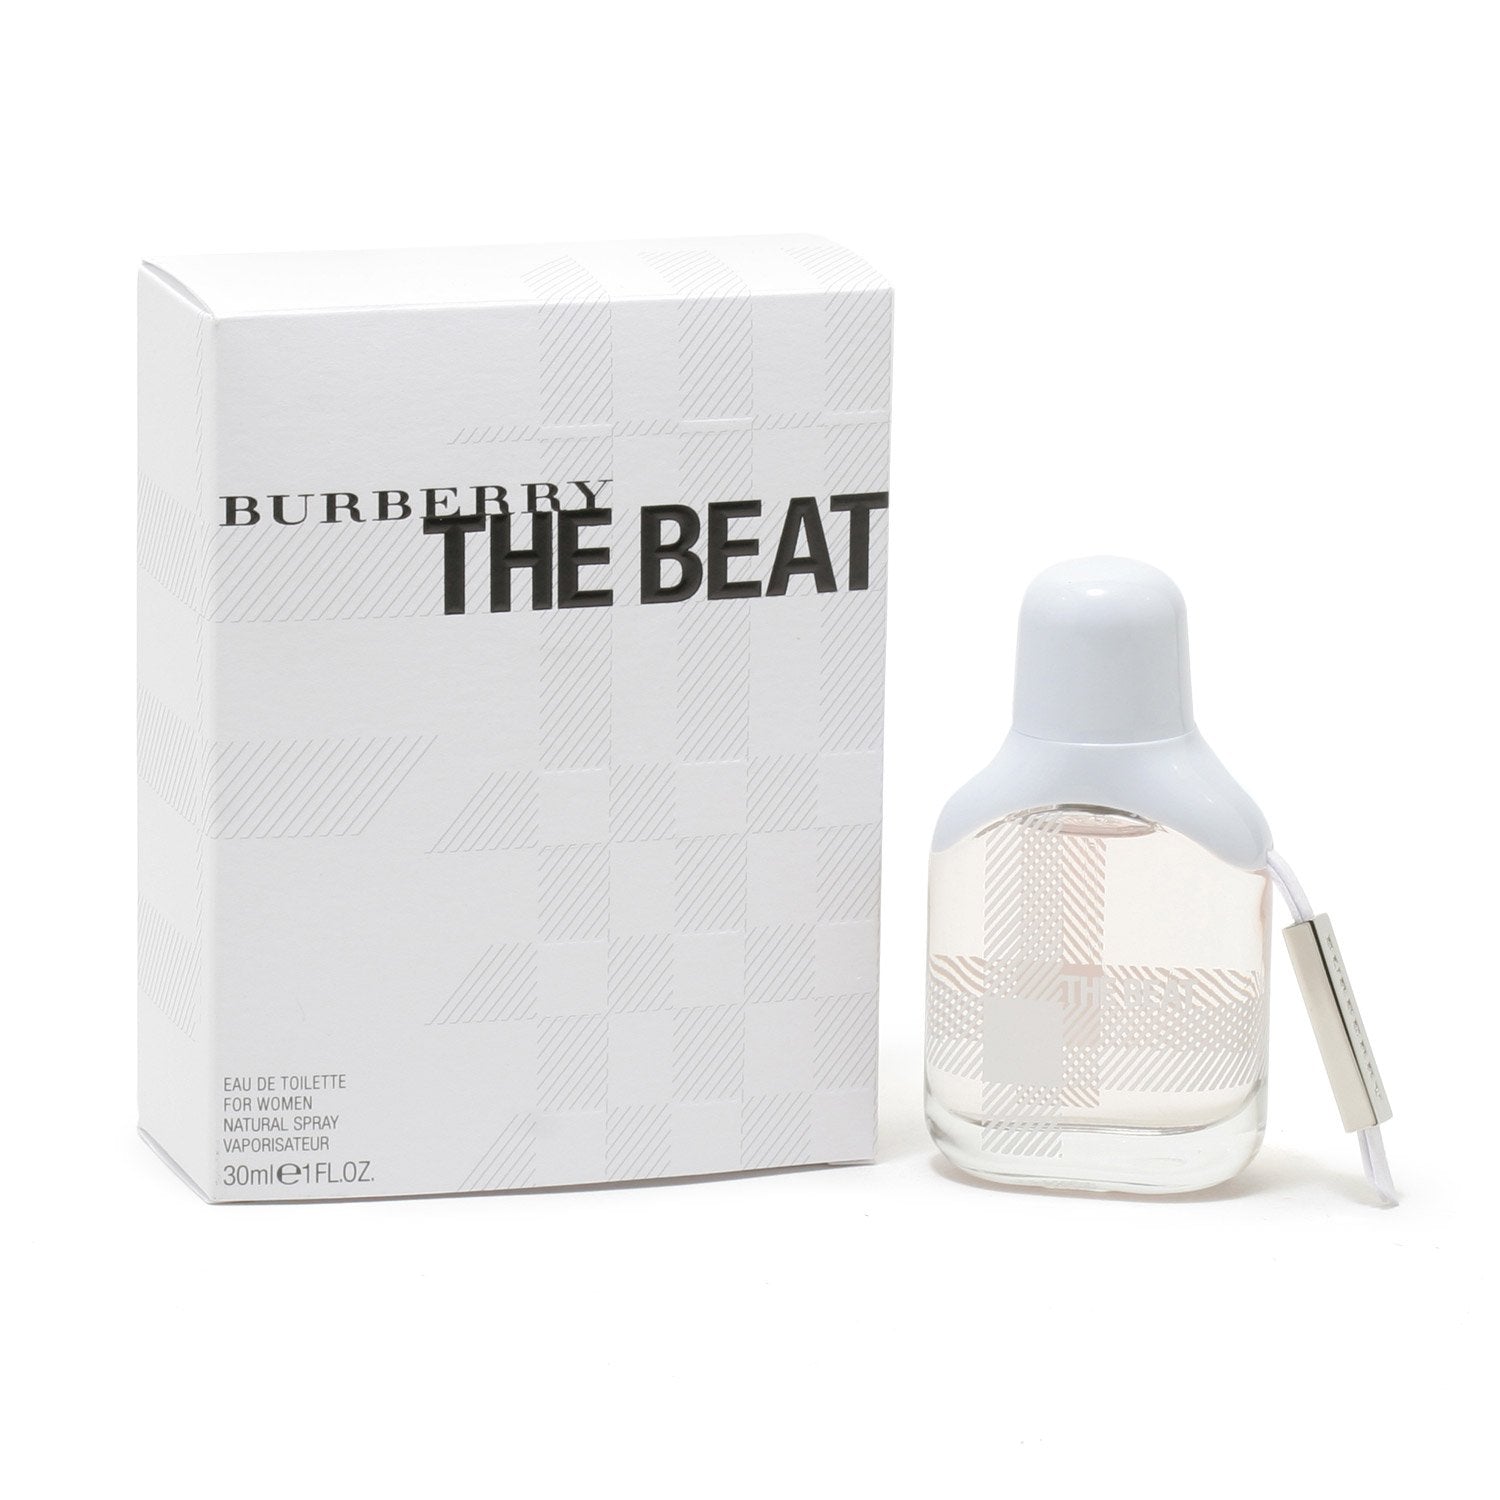 Perfume - BURBERRY THE BEAT FOR WOMEN - EAU DE TOILETTE SPRAY